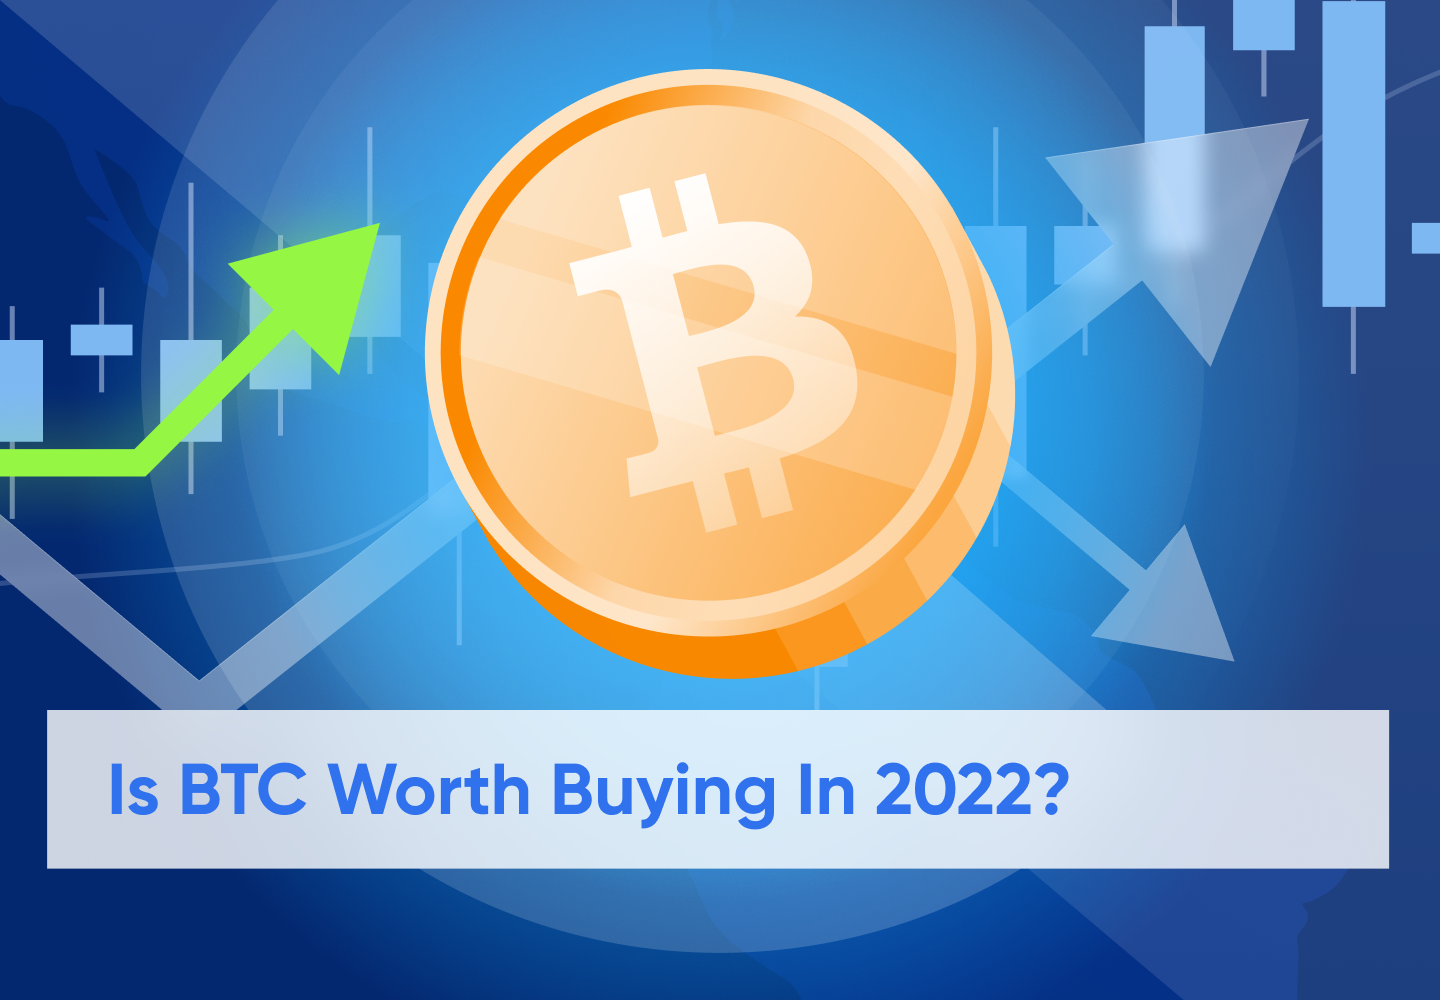 Bitcoin (BTC) Price Prediction 2022 To 2030